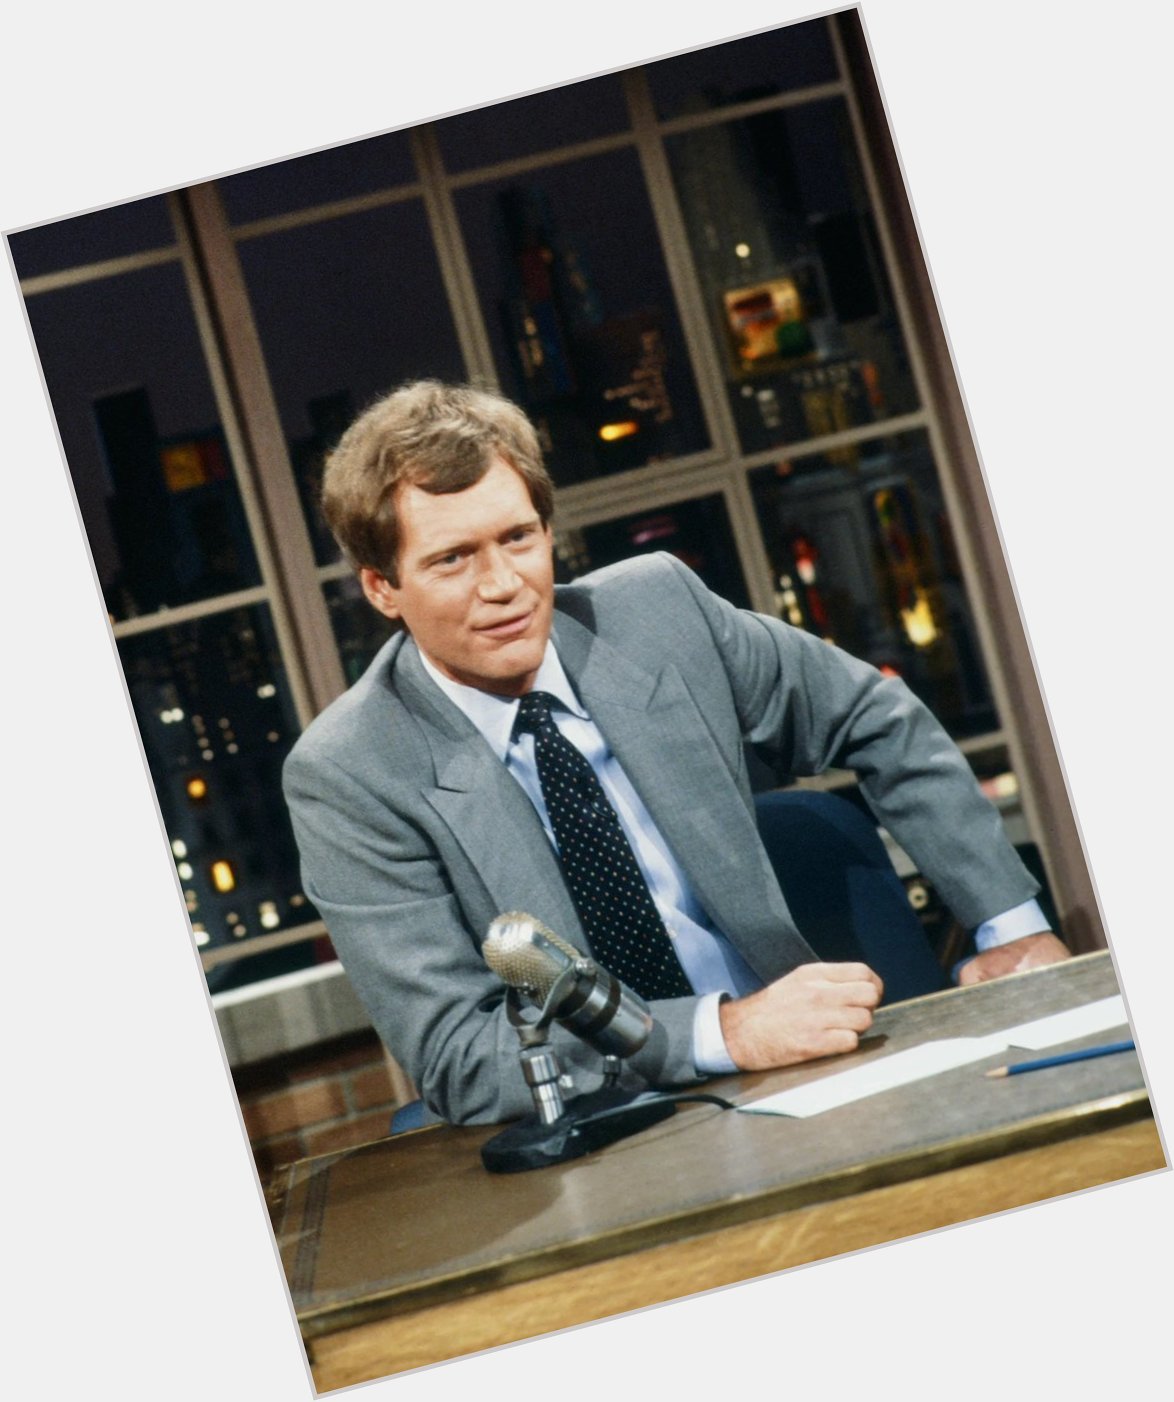 Happy Birthday to David Letterman! 